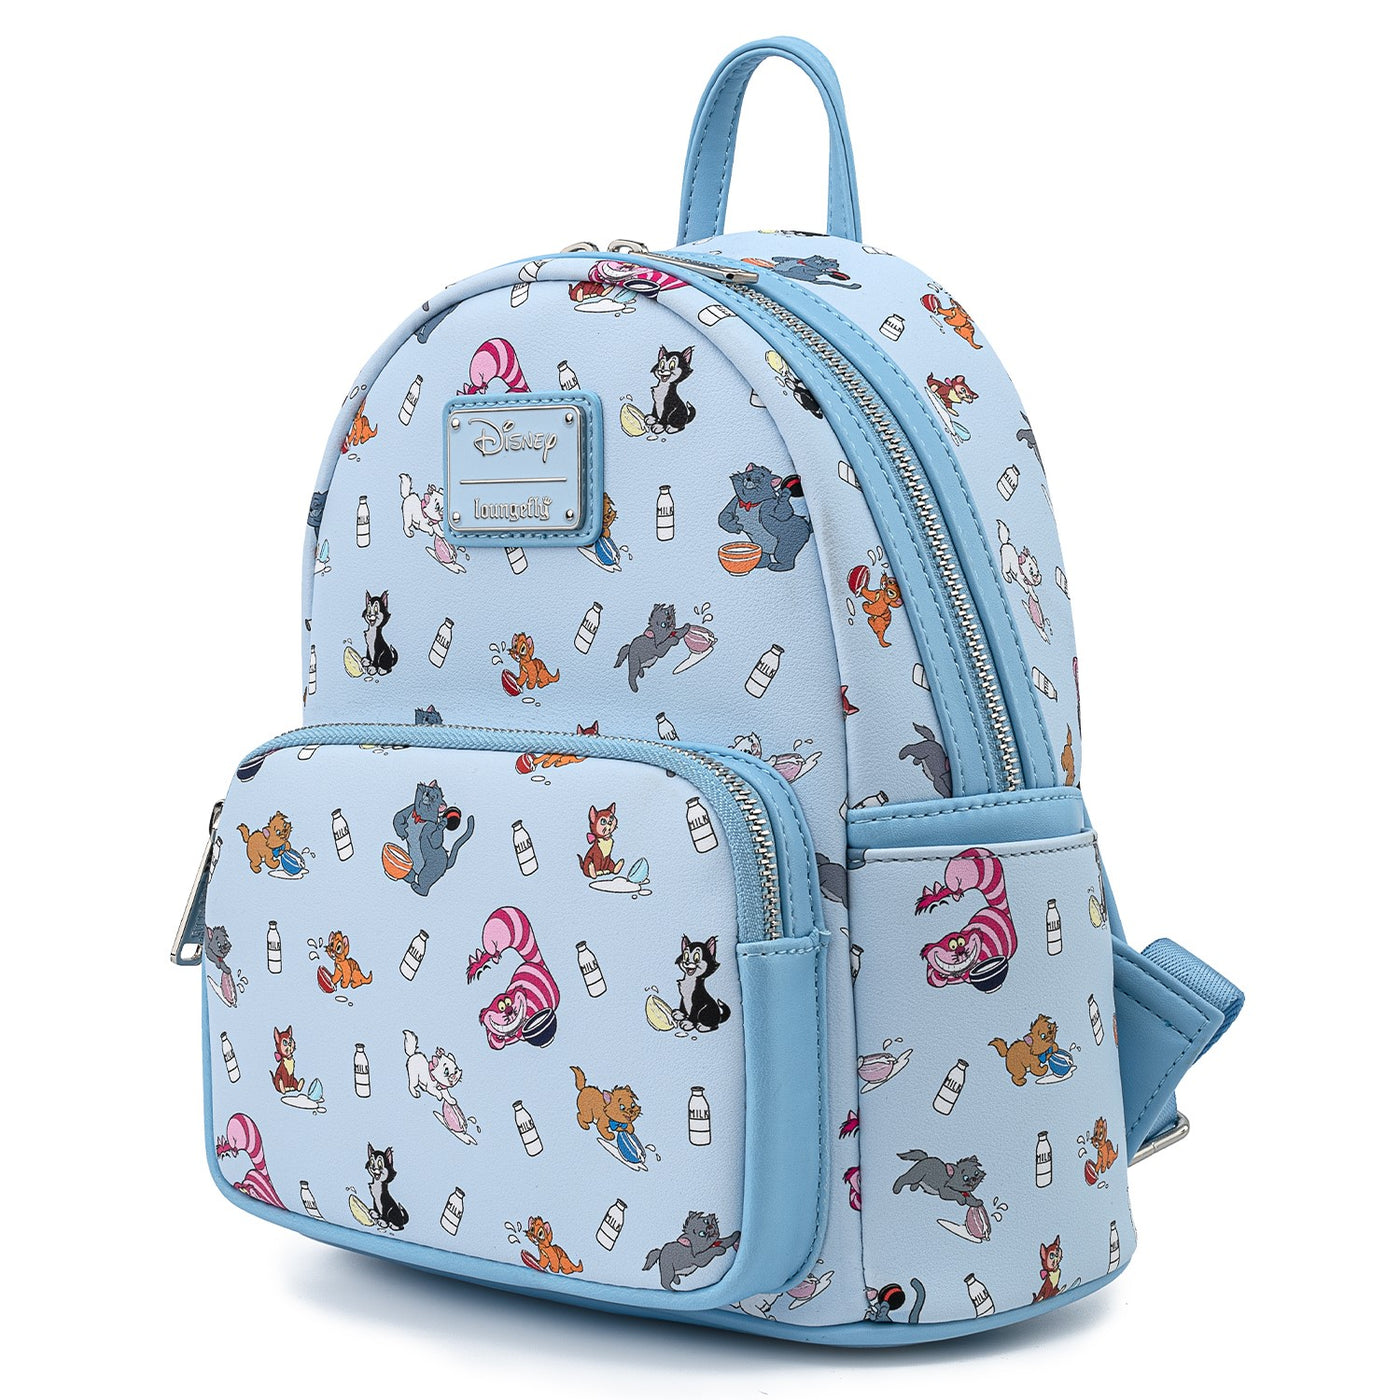 Disney Loungefly mini backpack